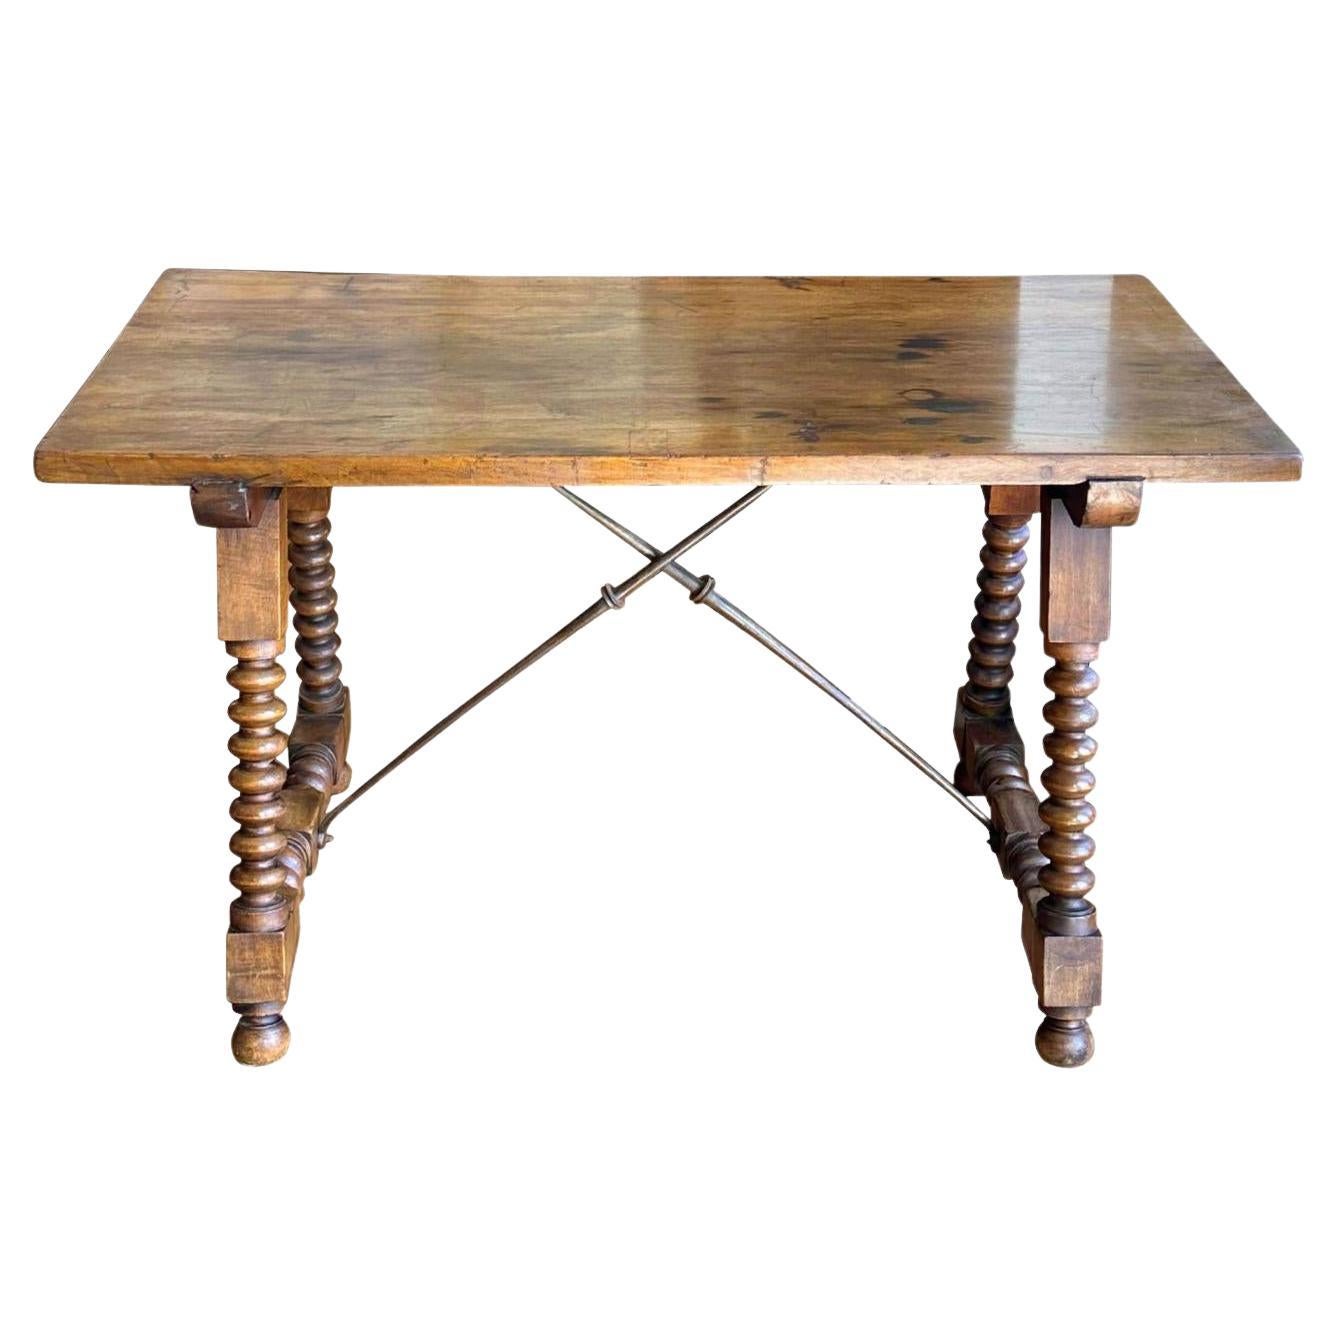 Spanish Trestle Table, circa 1800